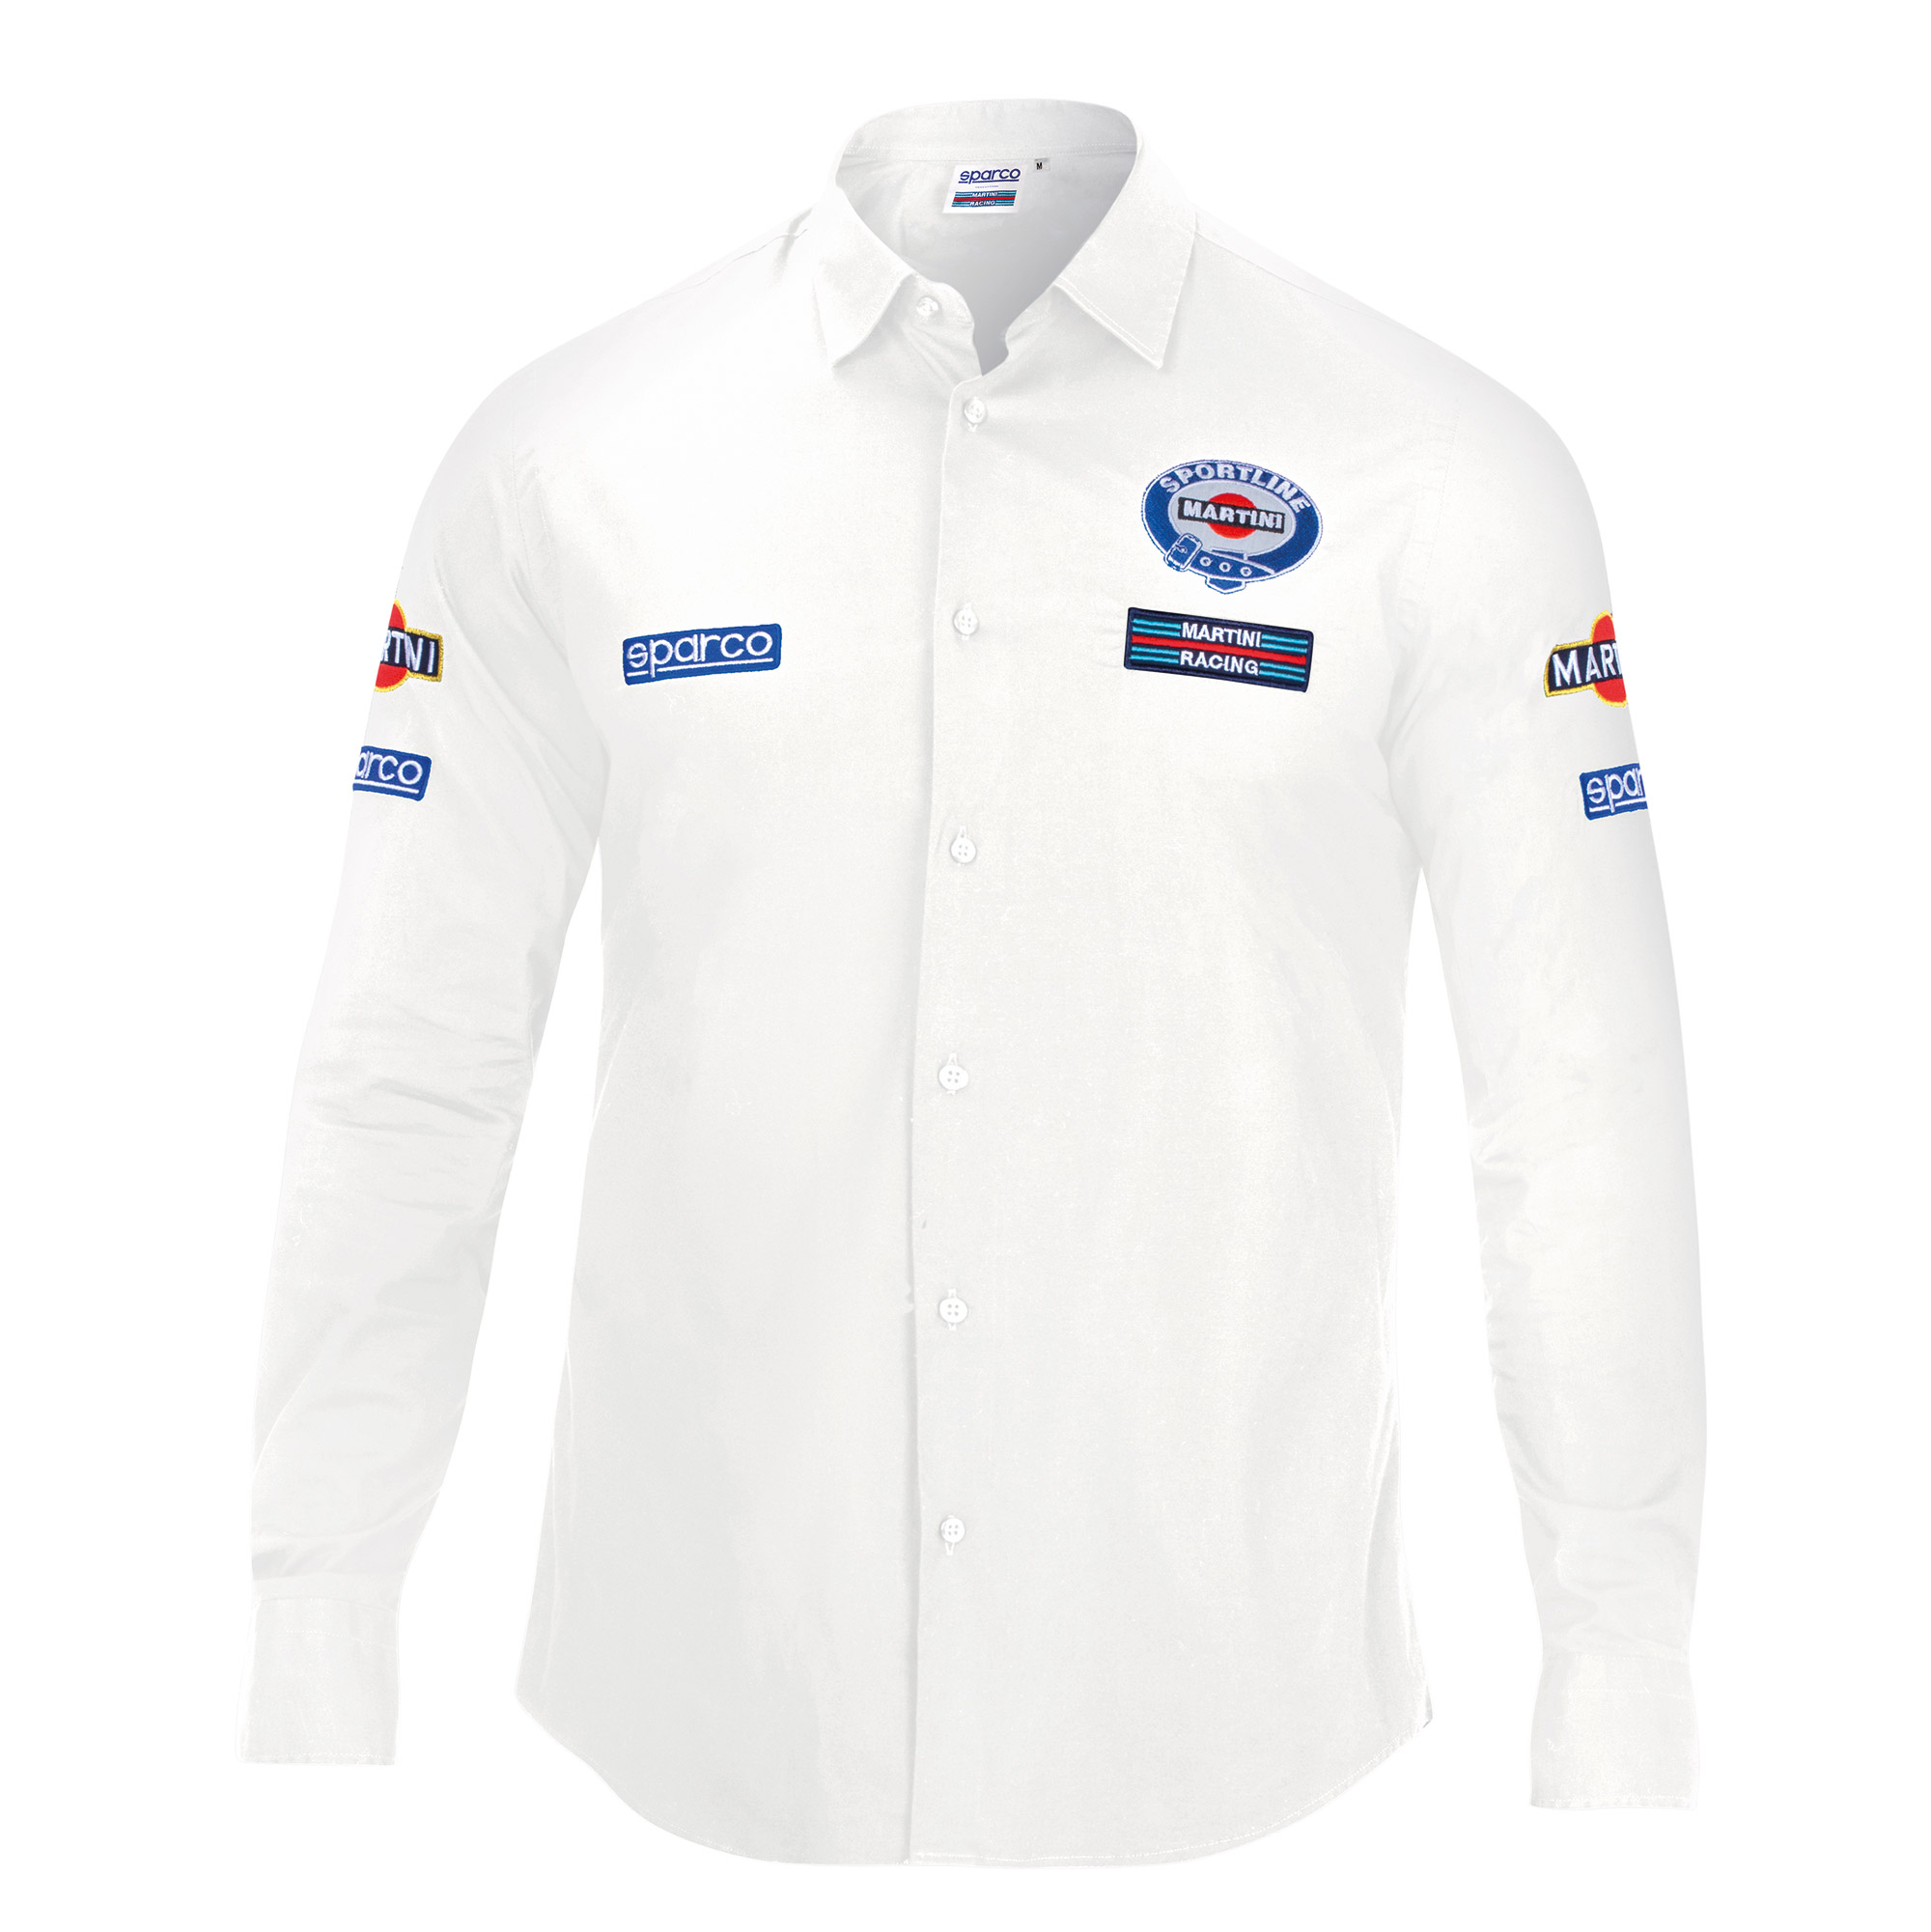 Sparco Motorsport Leisurewear Martini Racing Long Sleeve Shirt GORĄCE, klasyczne